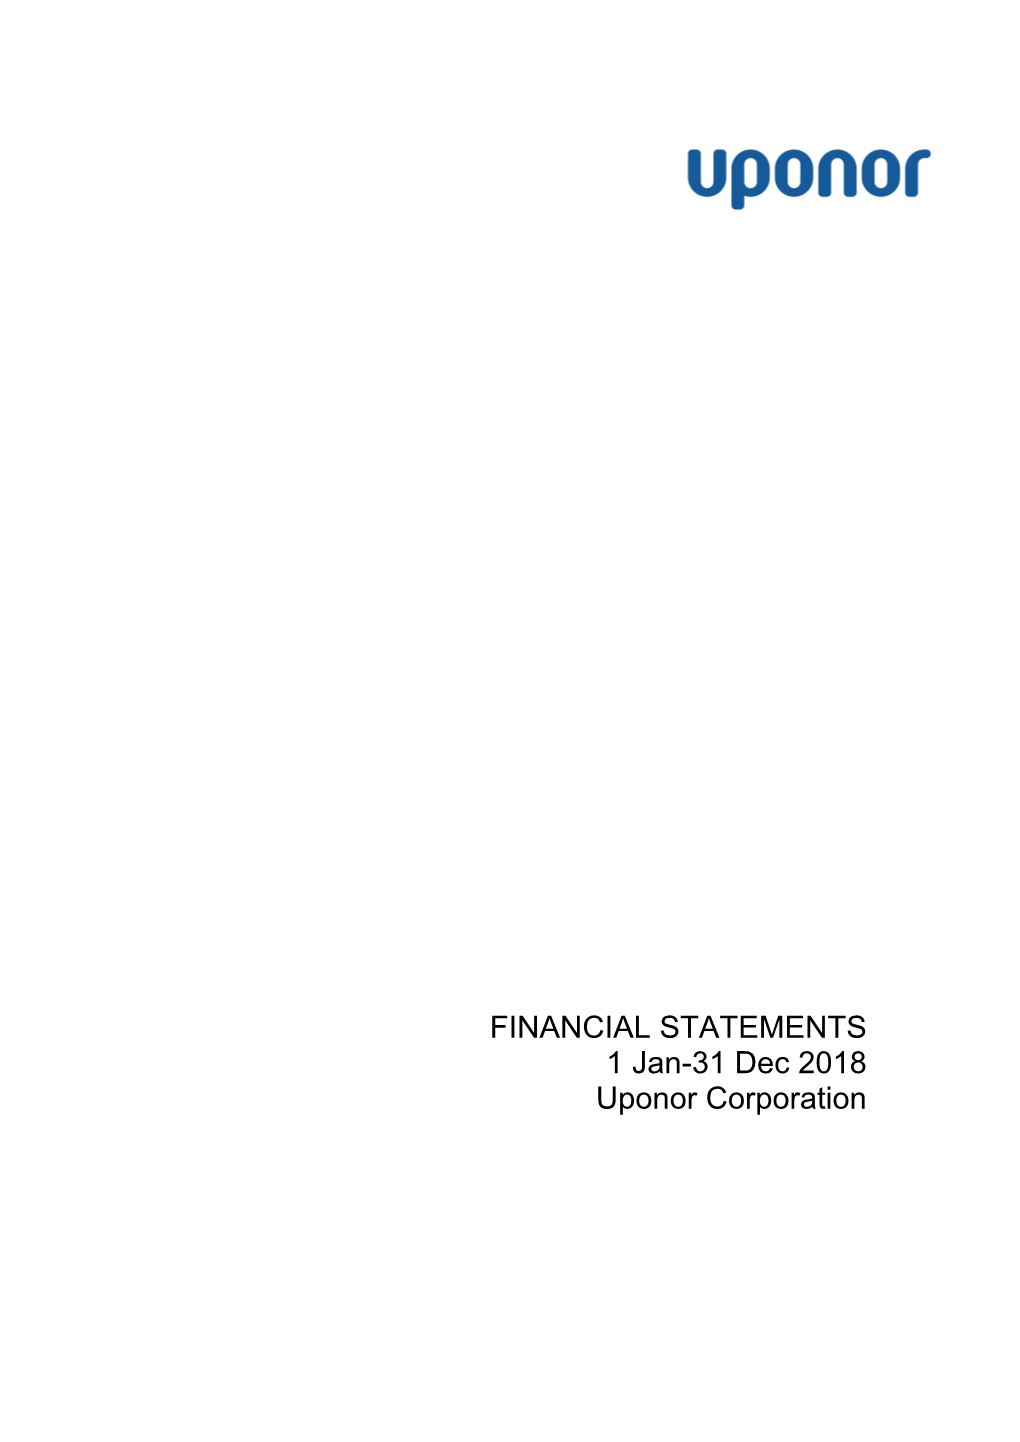 FINANCIAL STATEMENTS 1 Jan-31 Dec 2018 Uponor Corporation CONTENTS